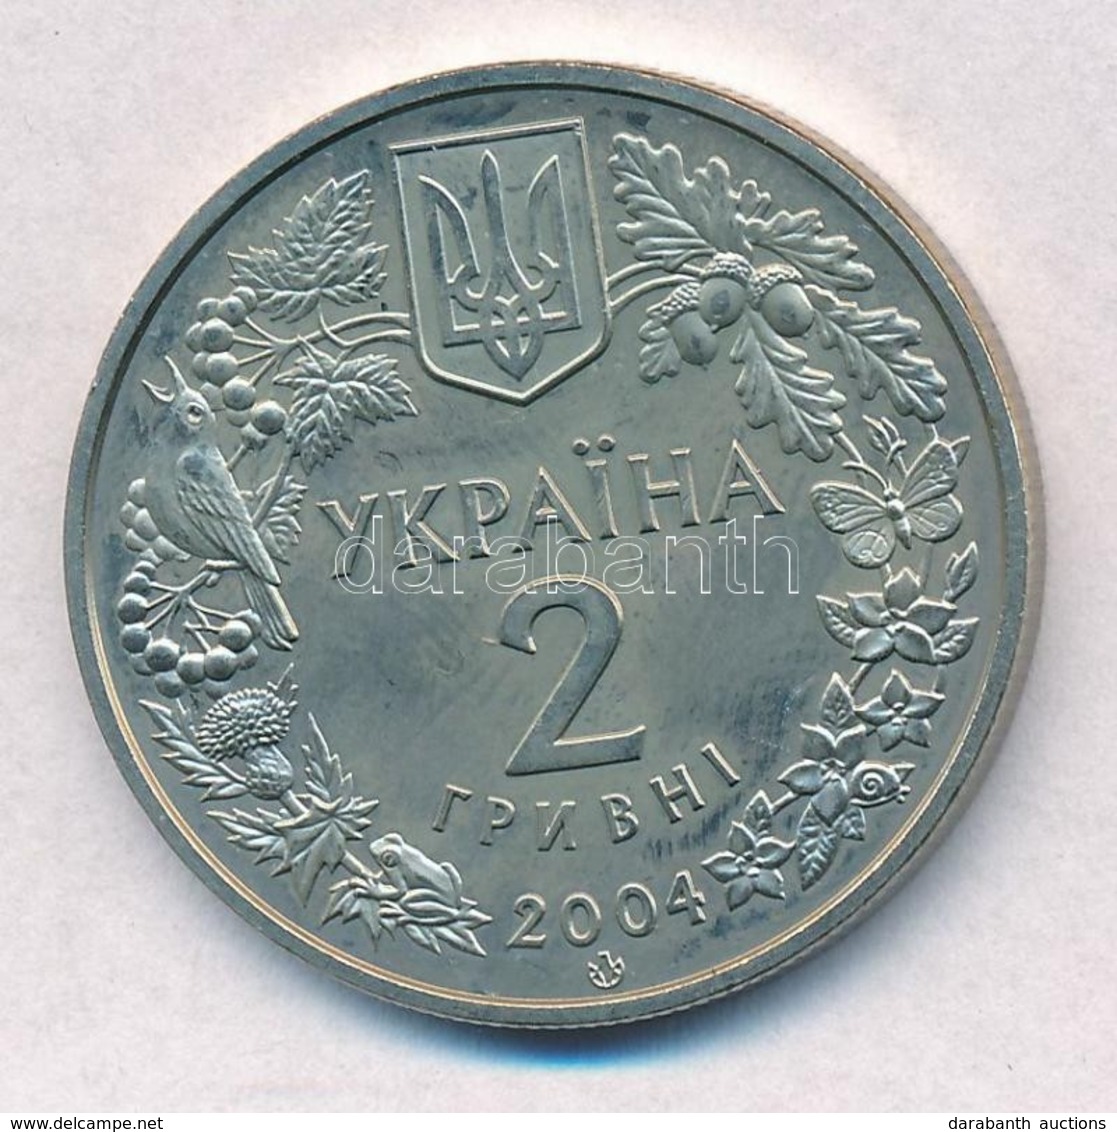 Ukrajna 2004. 2H Cu-Ni-Zn 'Azovi Delfin' T:1-
Ukraine 2004. 2 Hryvni Cu-Ni-Zn 'Azov Dolphin' C:AU
Krause KM#201 - Unclassified